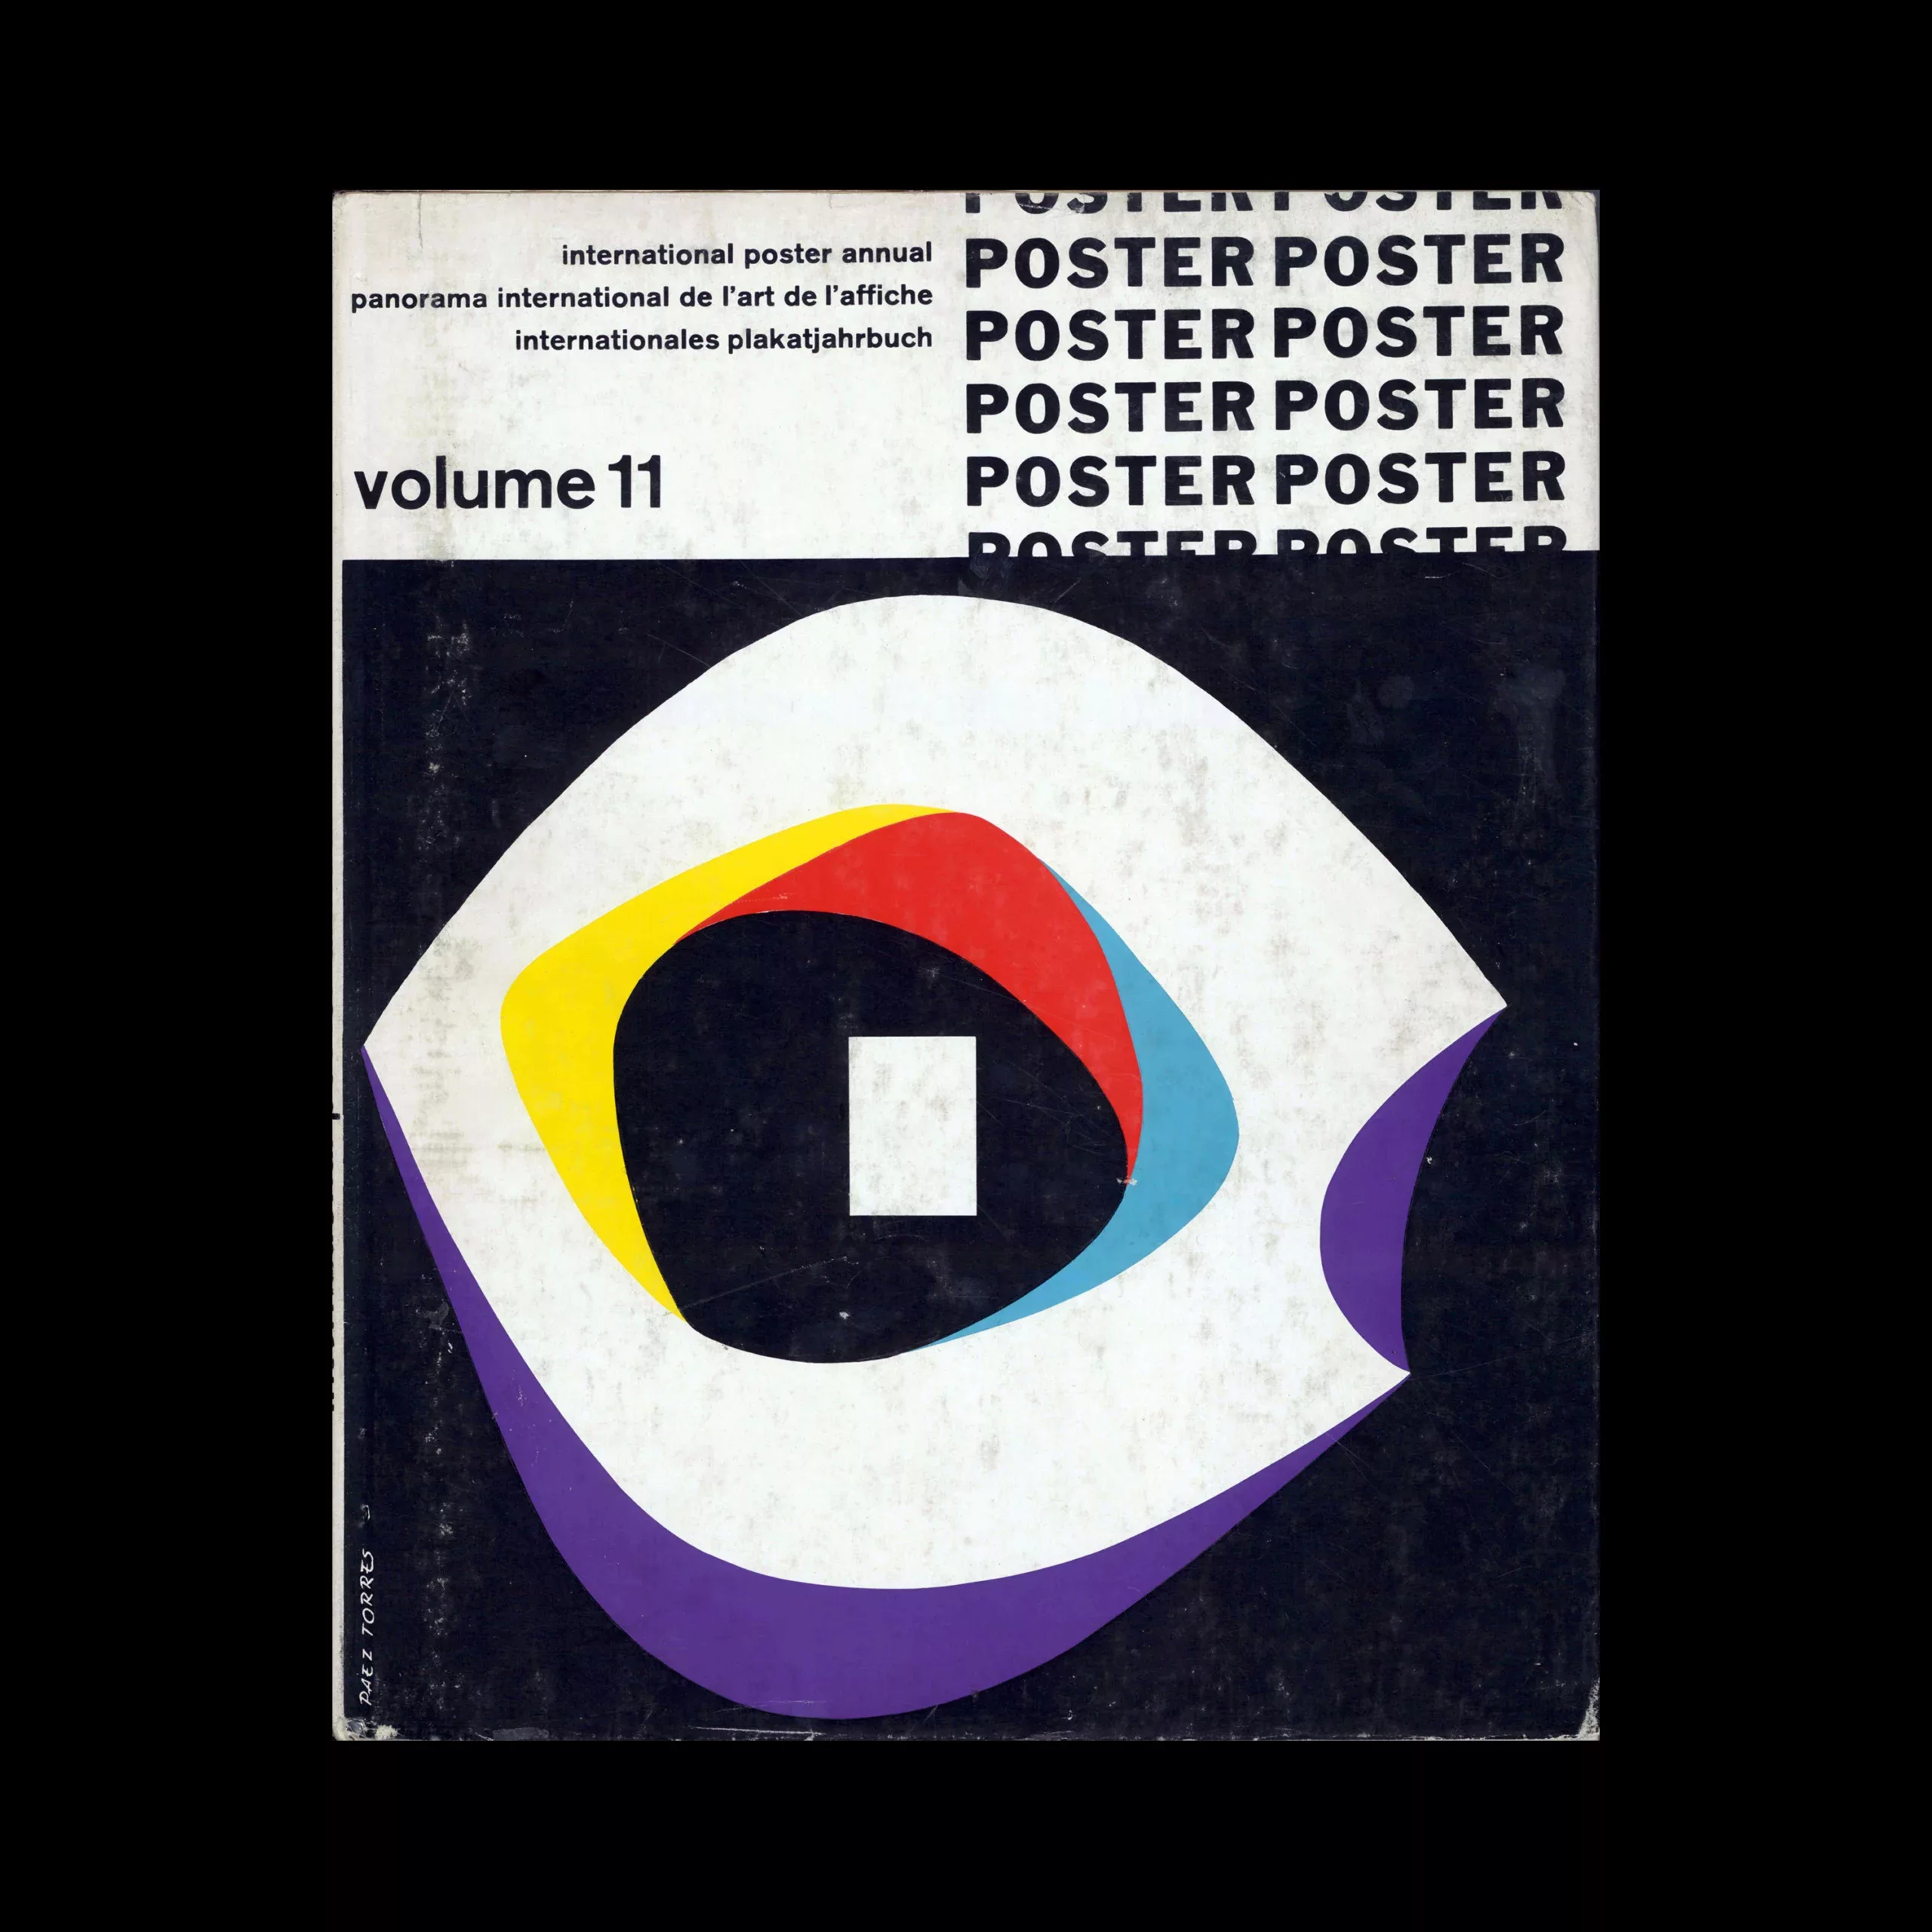 International Poster Annual, Volume 11, Arthur Niggli, 1963. Cover design by Páez Torres